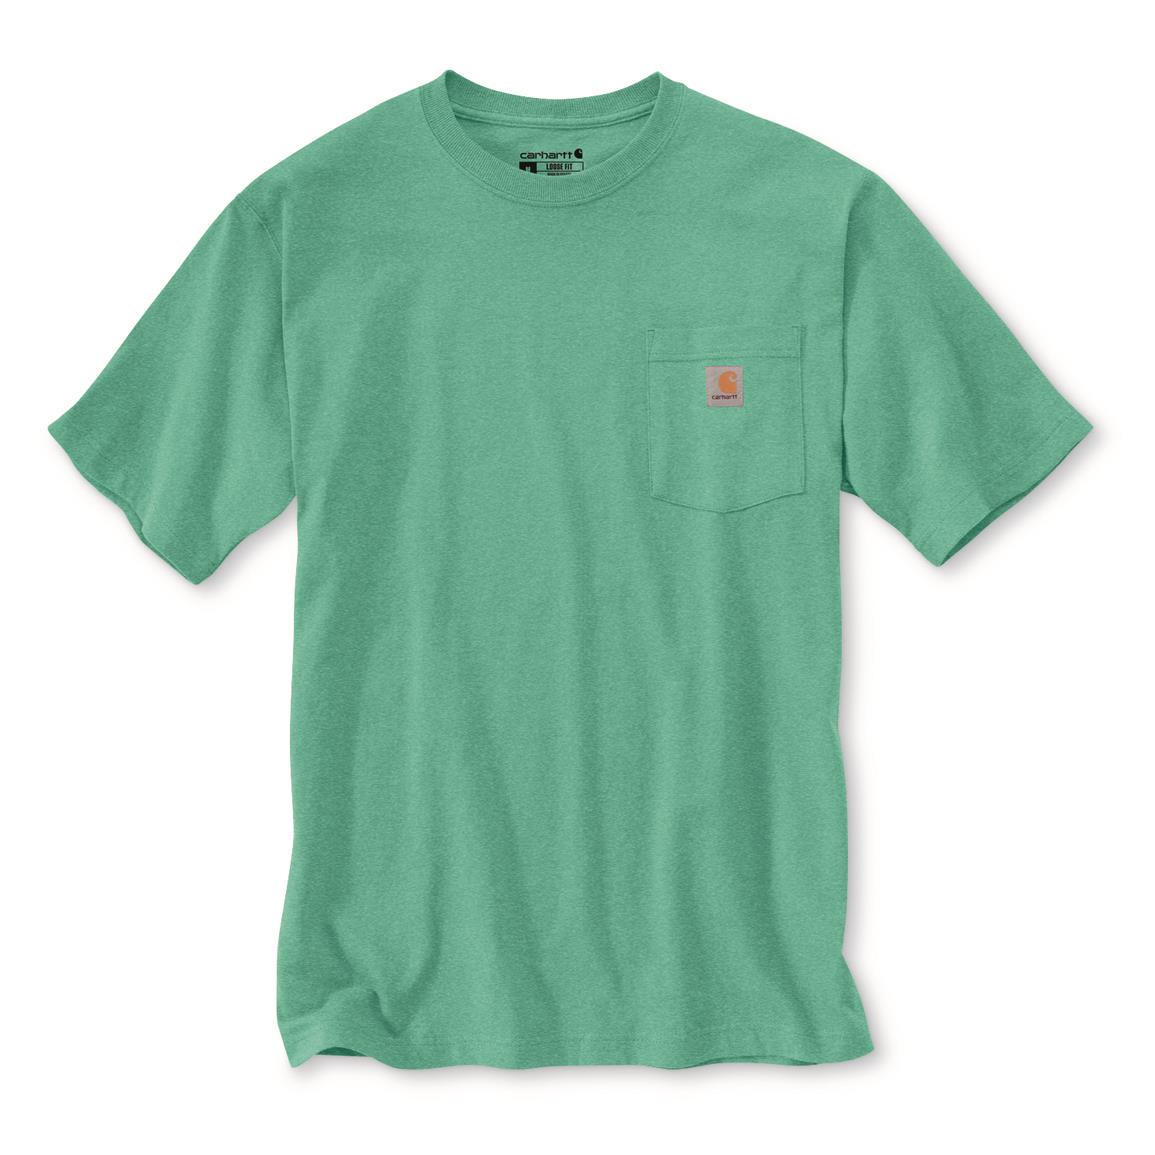 Carhartt Men's Workwear Short-sleeve Pocket Shirt, Sea Green Heather